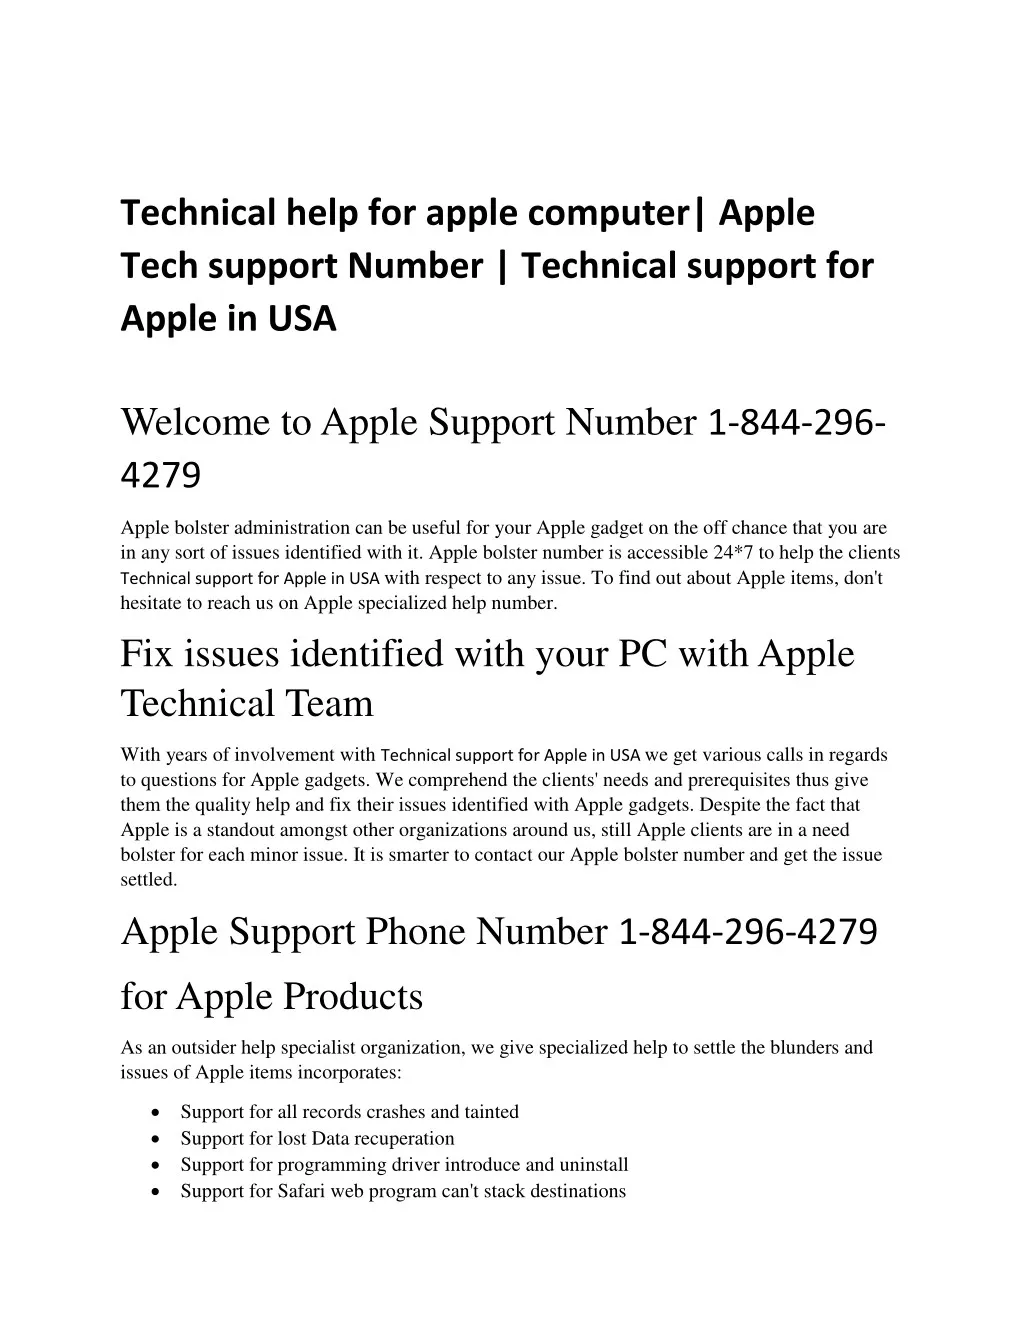 technical help for apple computer apple tech